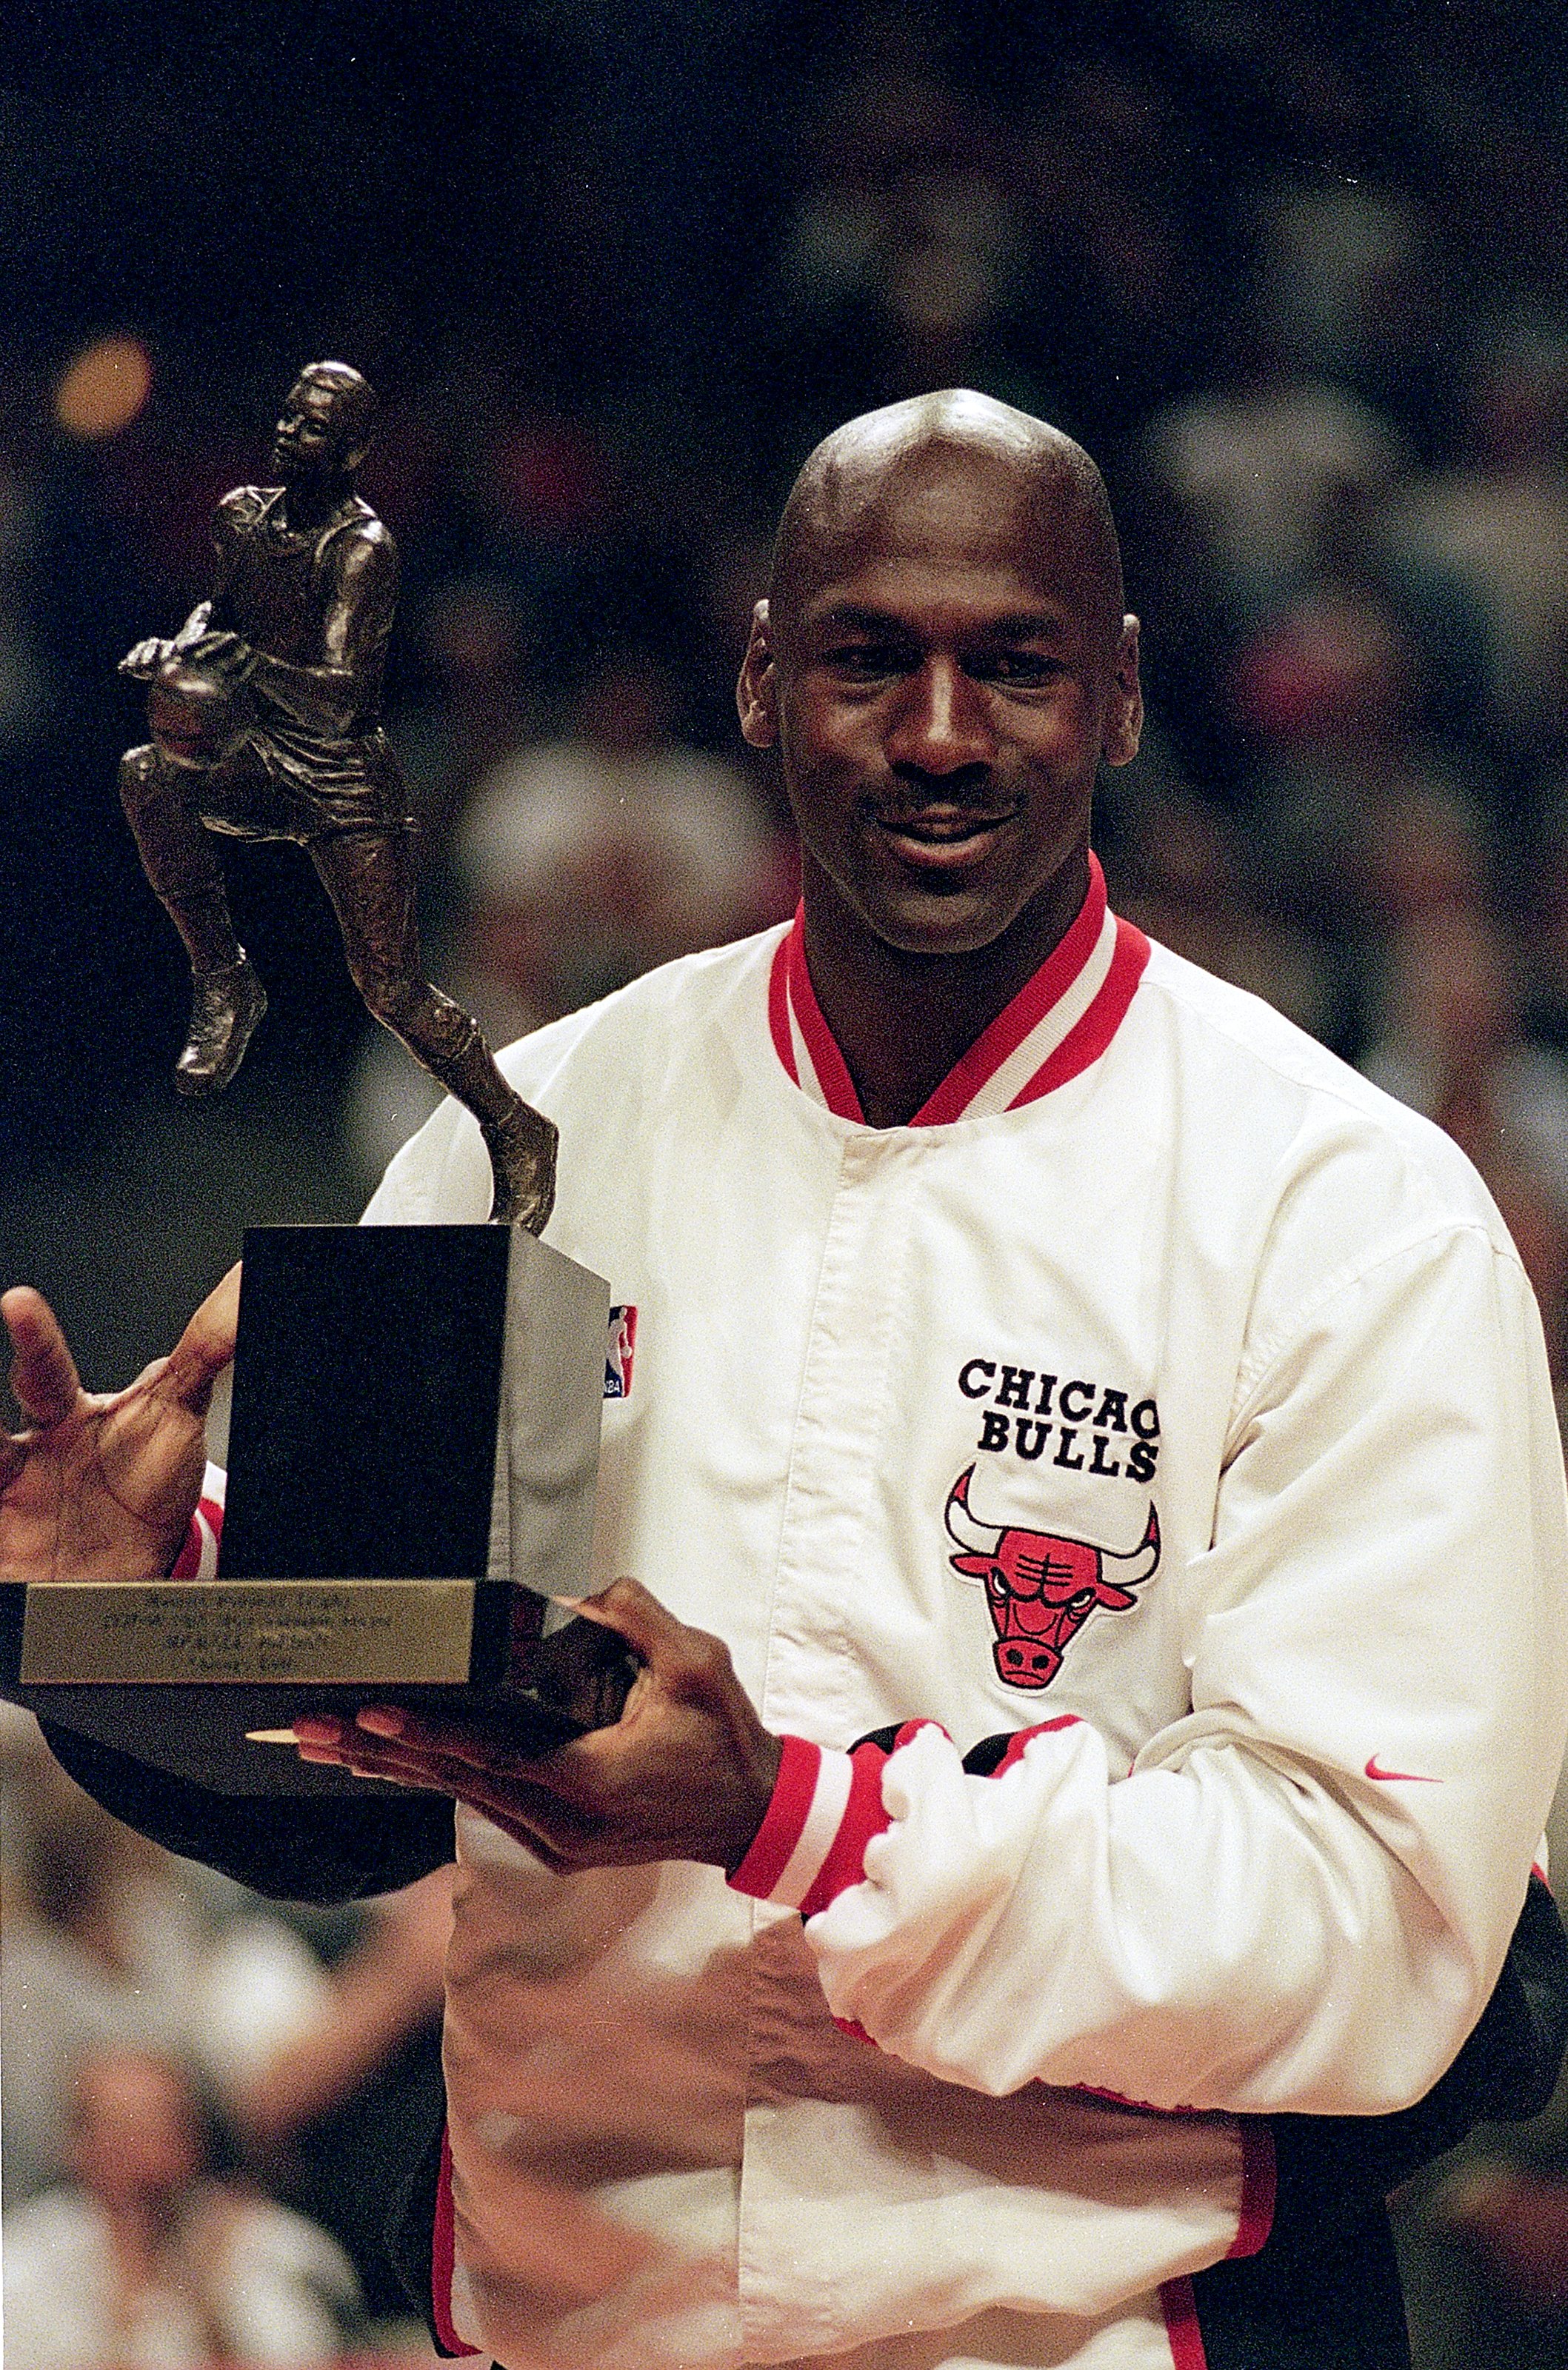 NBA names new MVP trophy after five-time MVP Michael Jordan